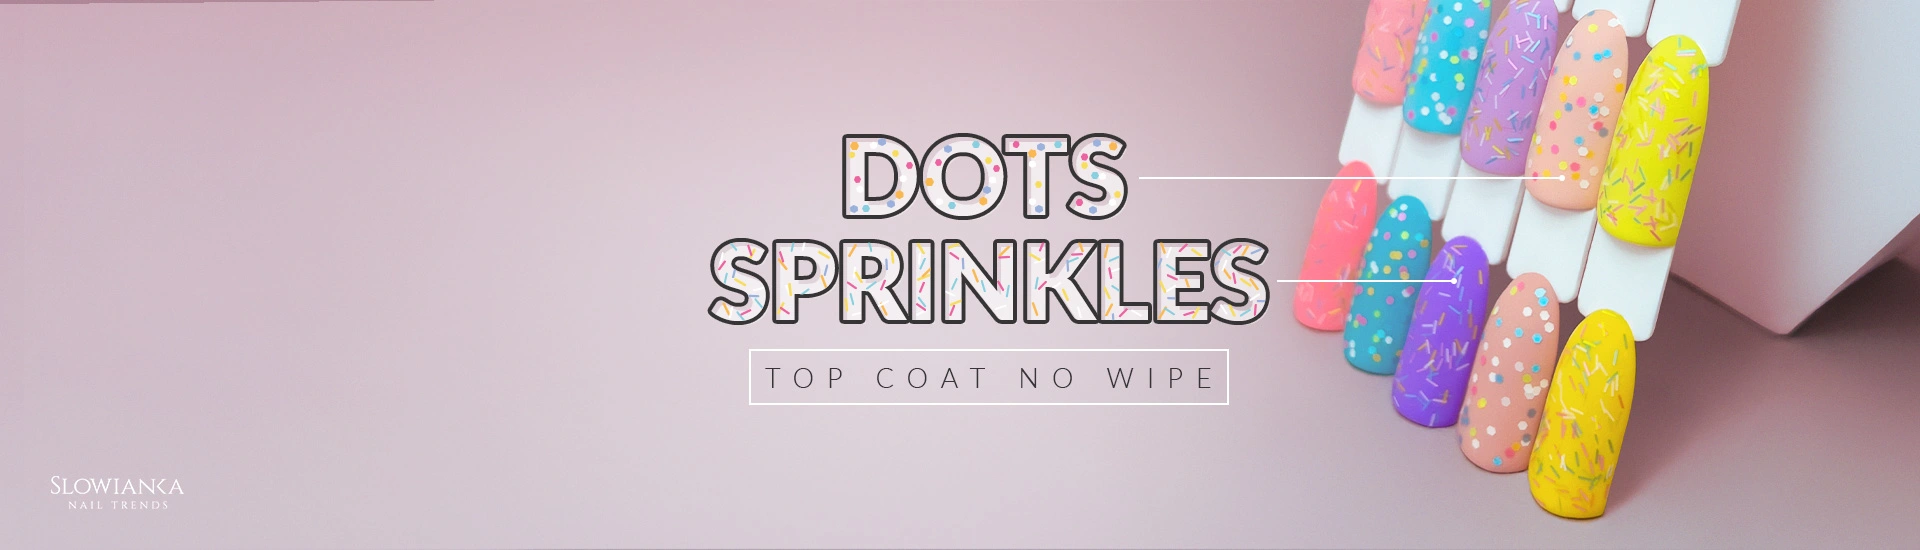 Sprinkles dots top coat